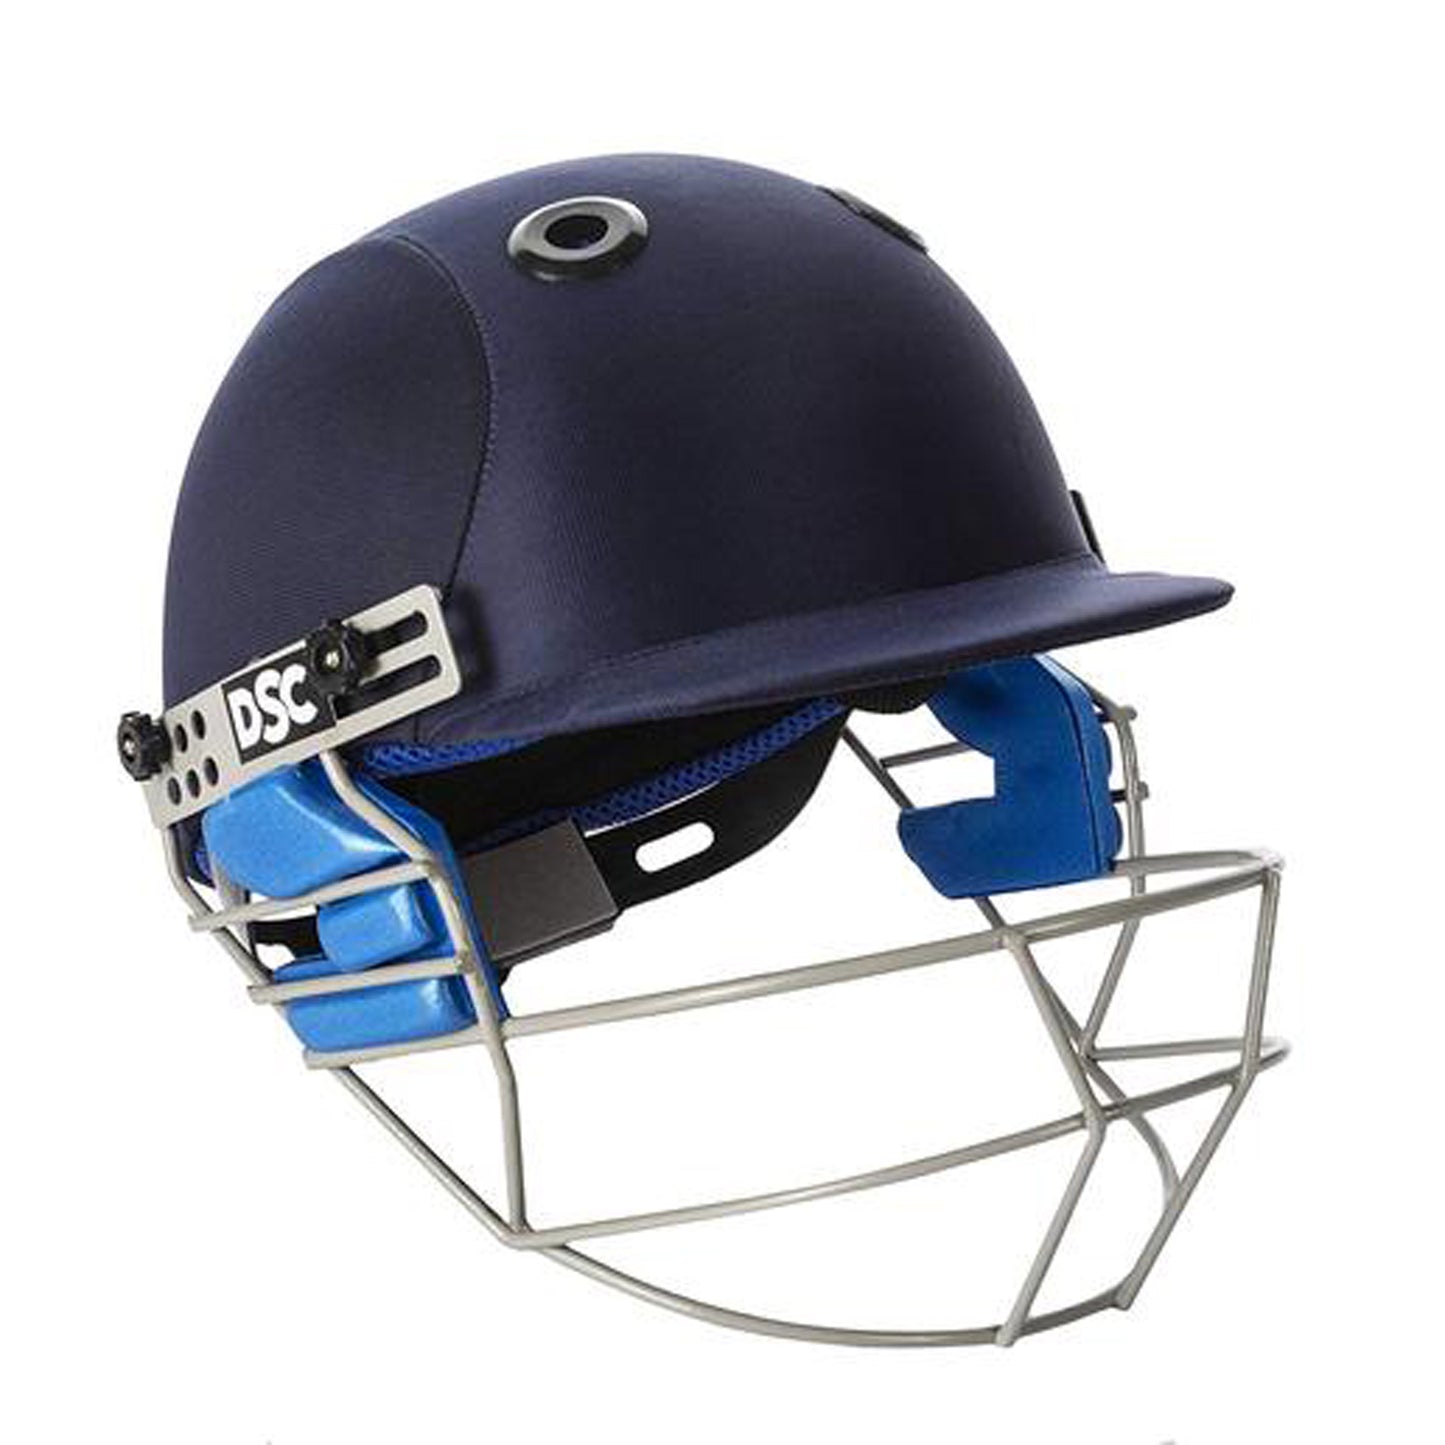 DSC Guard Cricket Helmet - Best Price online Prokicksports.com